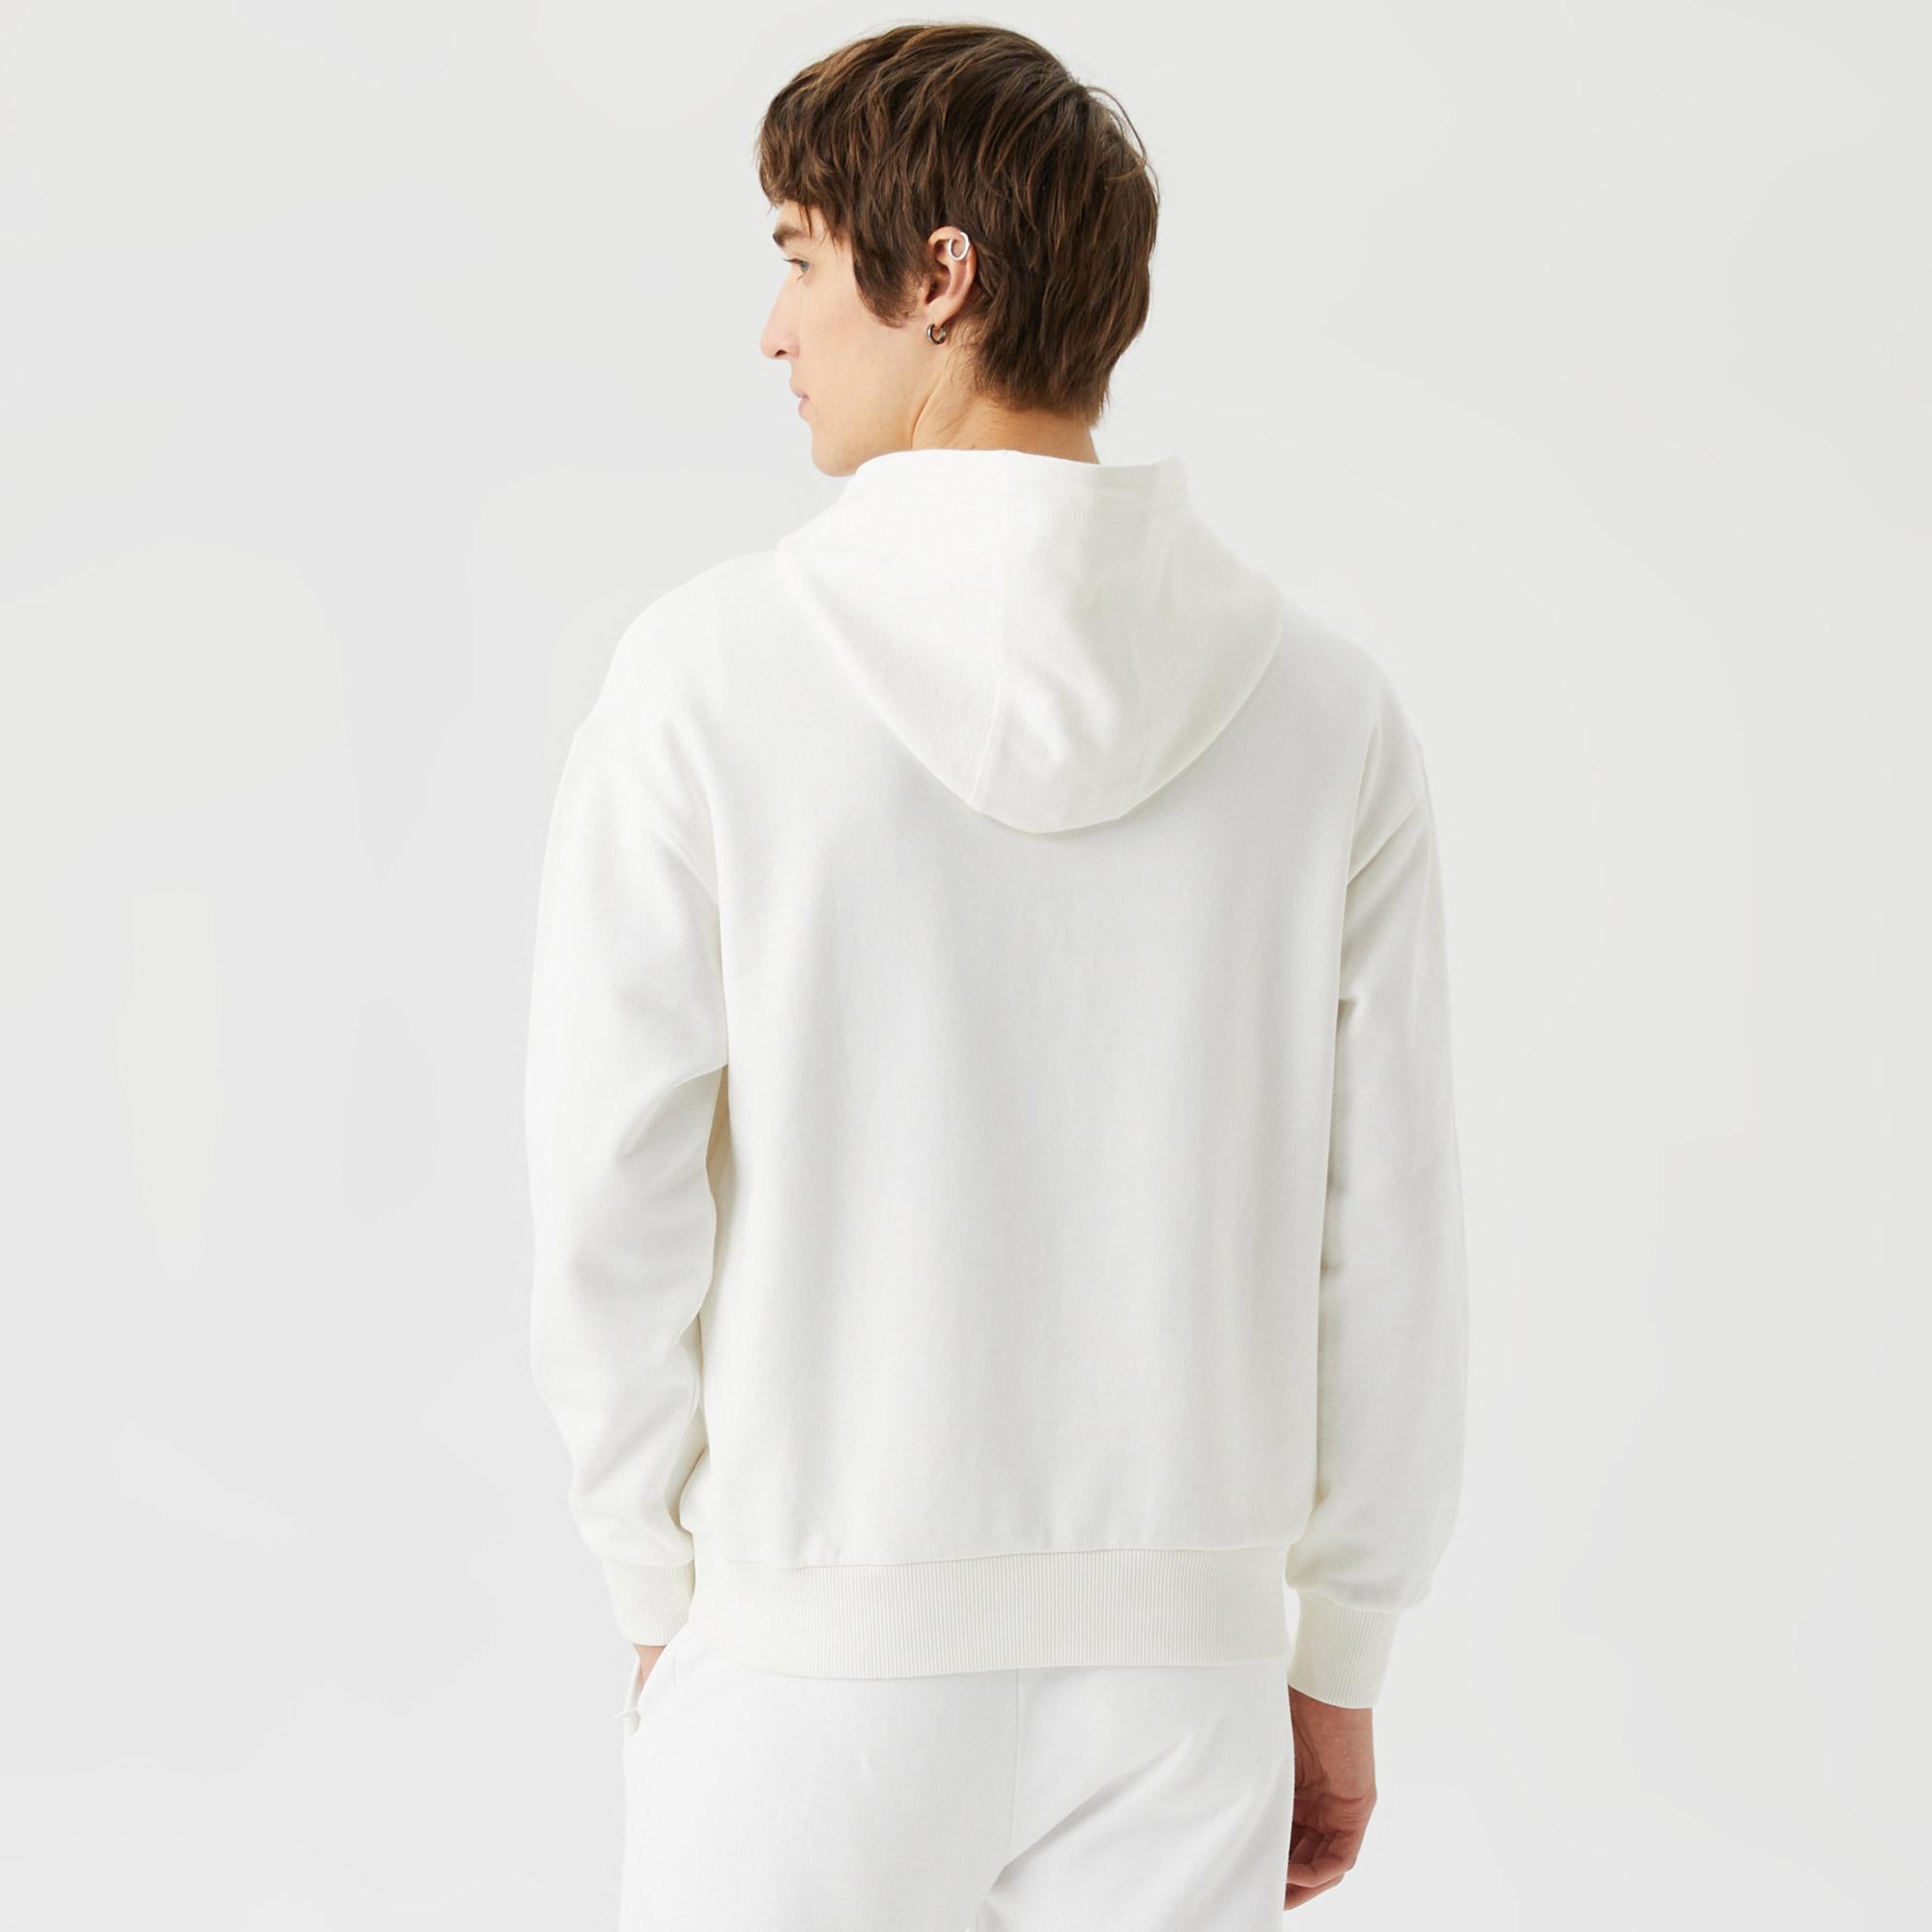 Lacoste Unisex Relaxed Fit Kapüşonlu Baskılı Beyaz Sweatshirt. 3